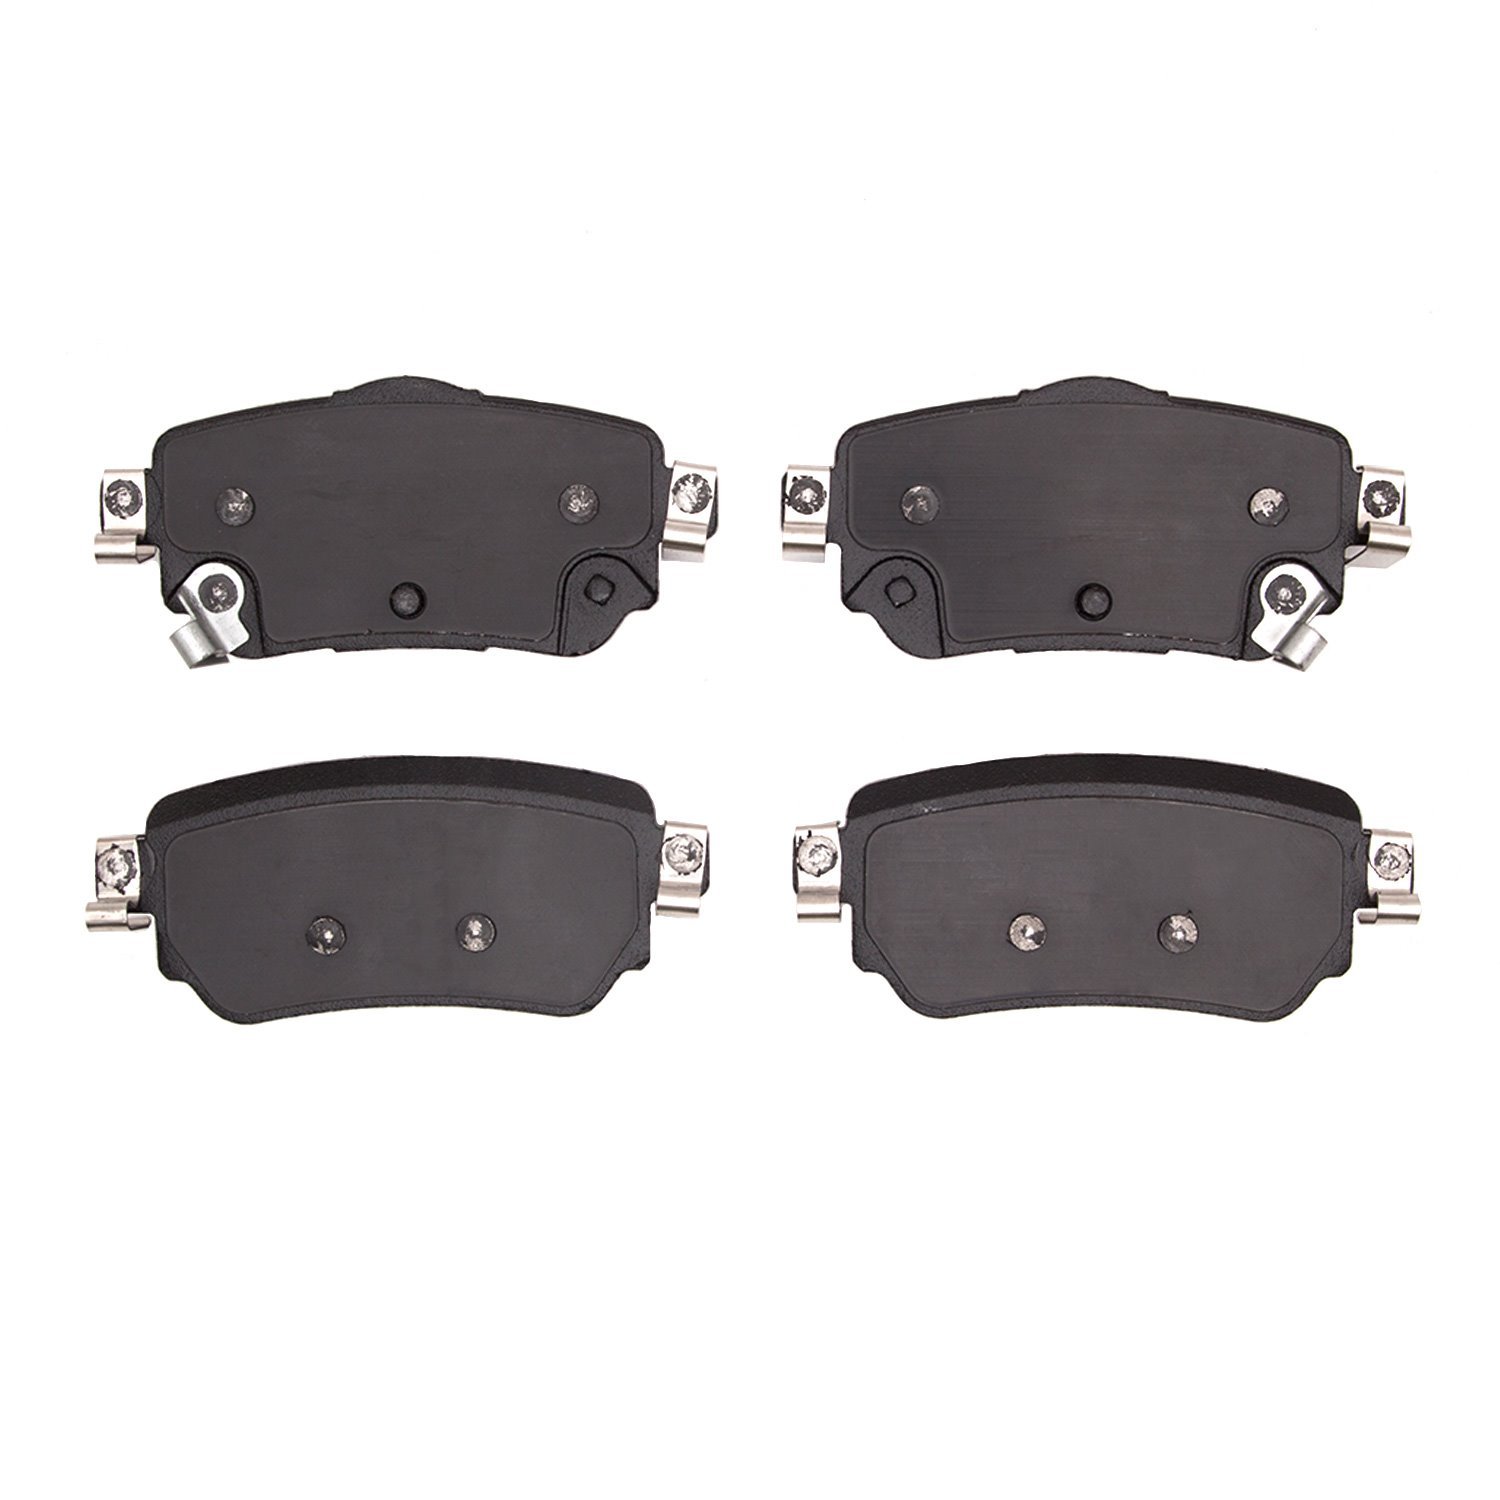 1551-1965-00 5000 Advanced Ceramic Brake Pads, Fits Select Infiniti/Nissan, Position: Rear